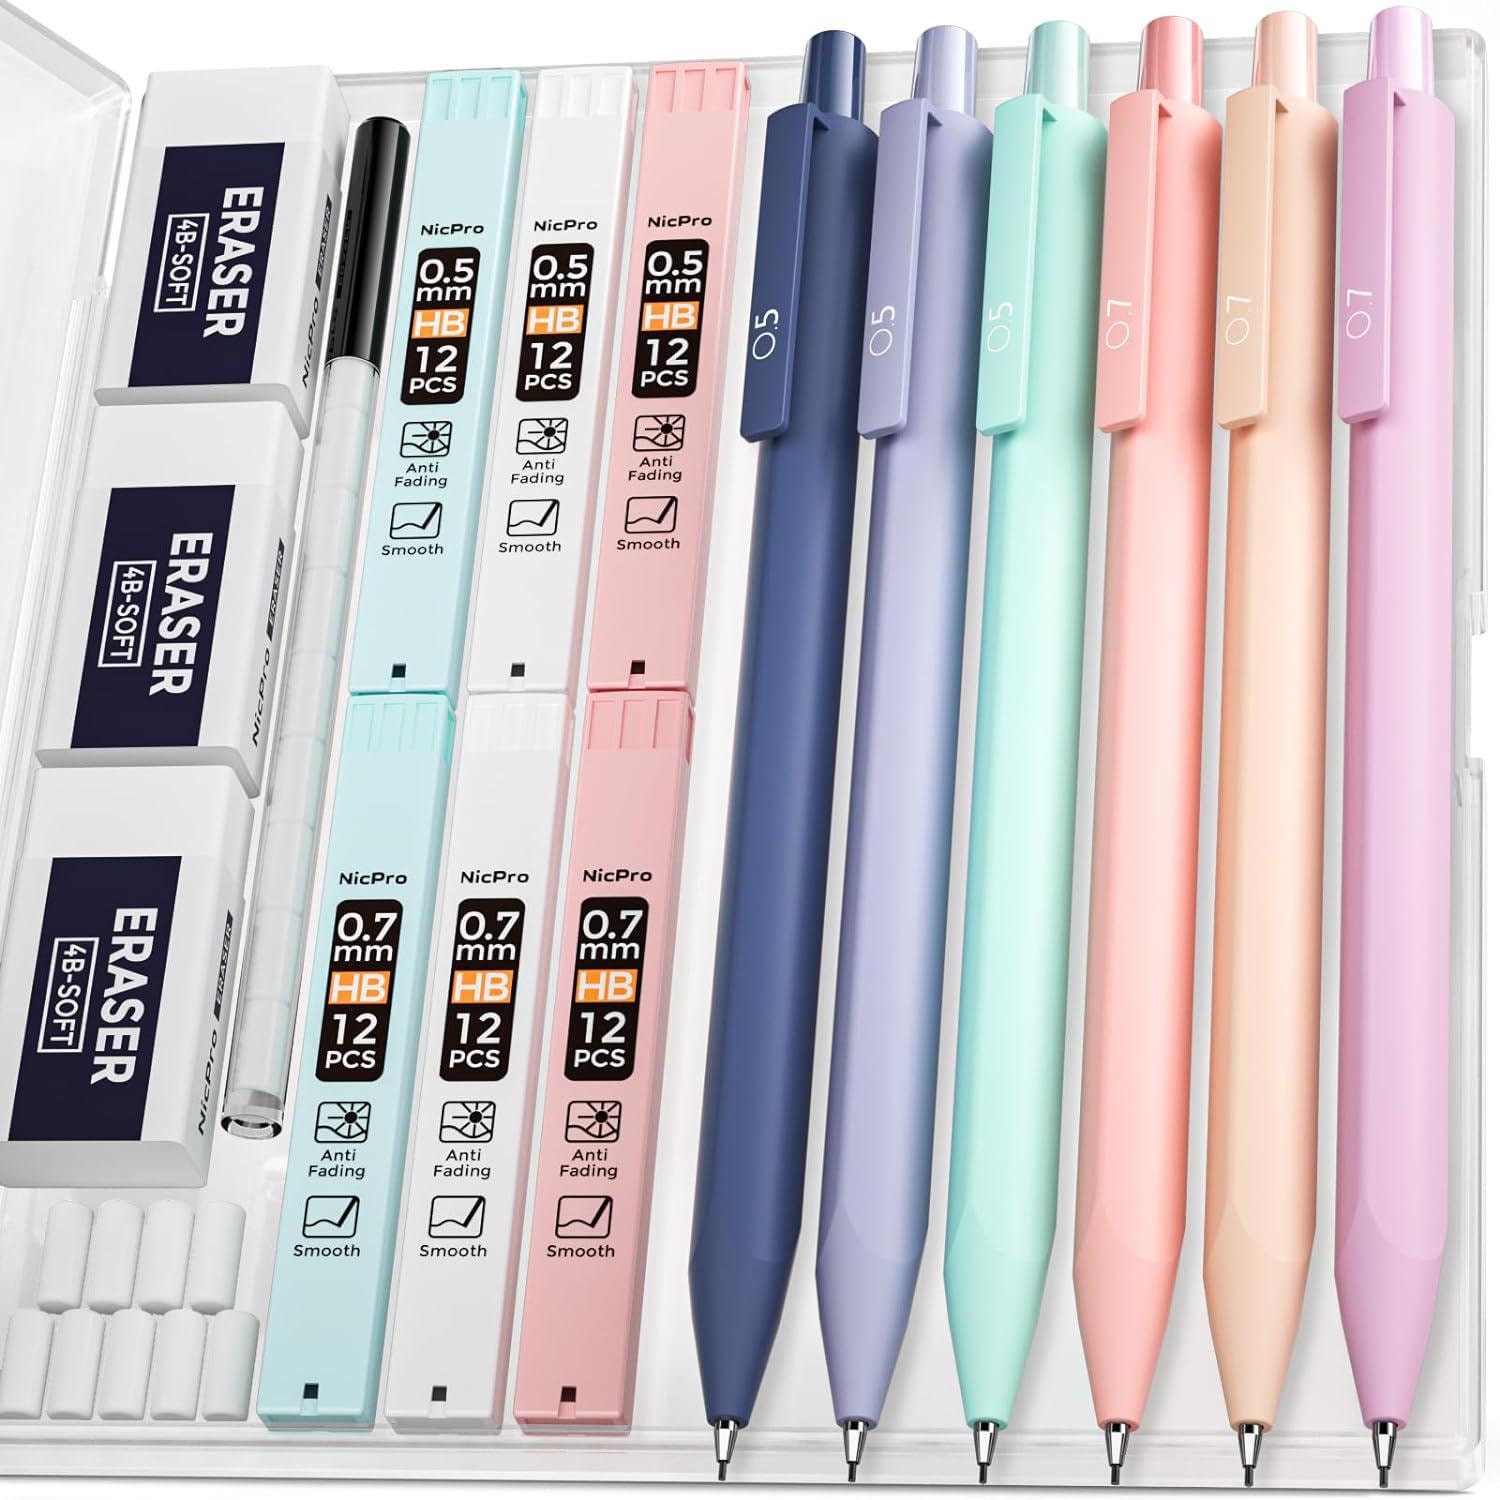 Pentel MULTI 8 Color 8-in-1 Highlighter Crayon Mechanical Pencil